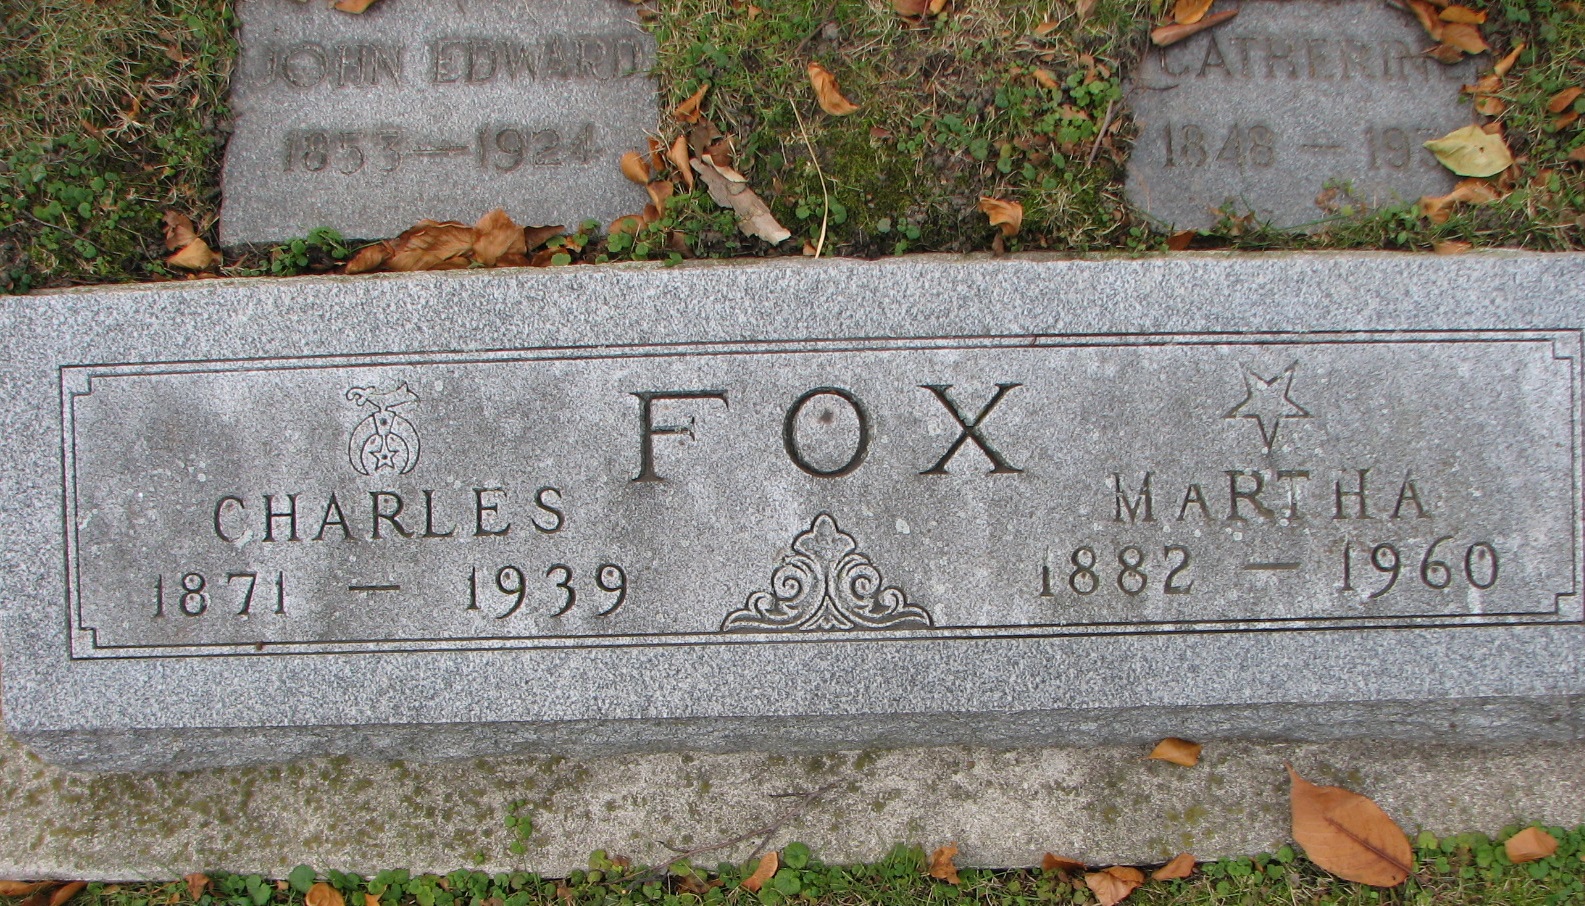 FOX - Charles 1871-1939_ Martha 1882-1960